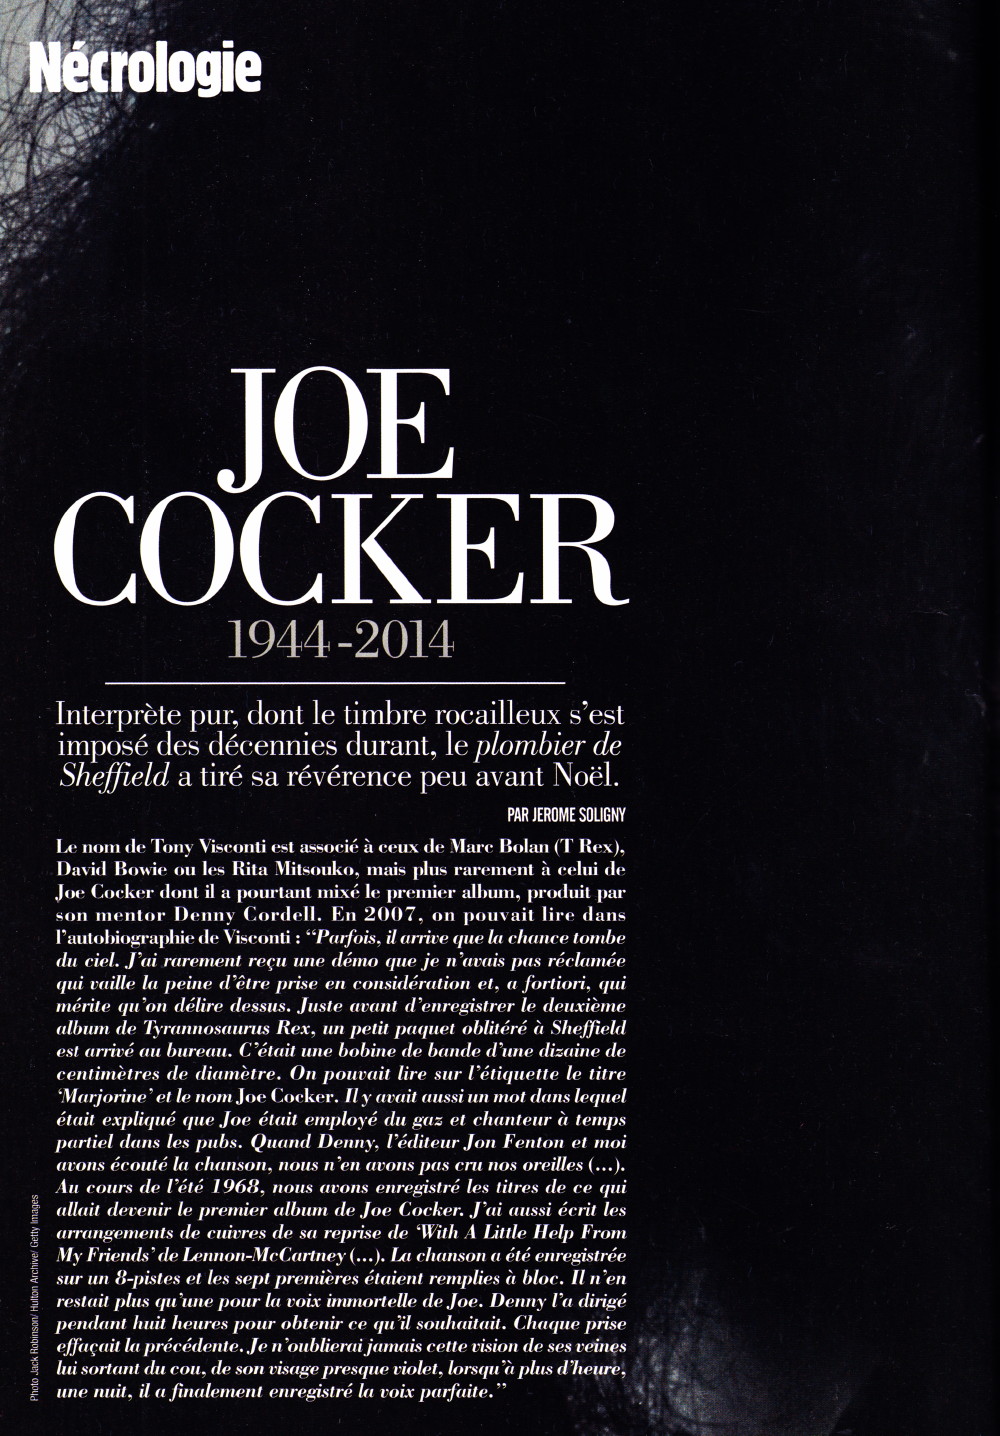 JOE COCKER par JEROME SOLIGNY ("Rock Folk", février 2015) 16091909581620773814501757